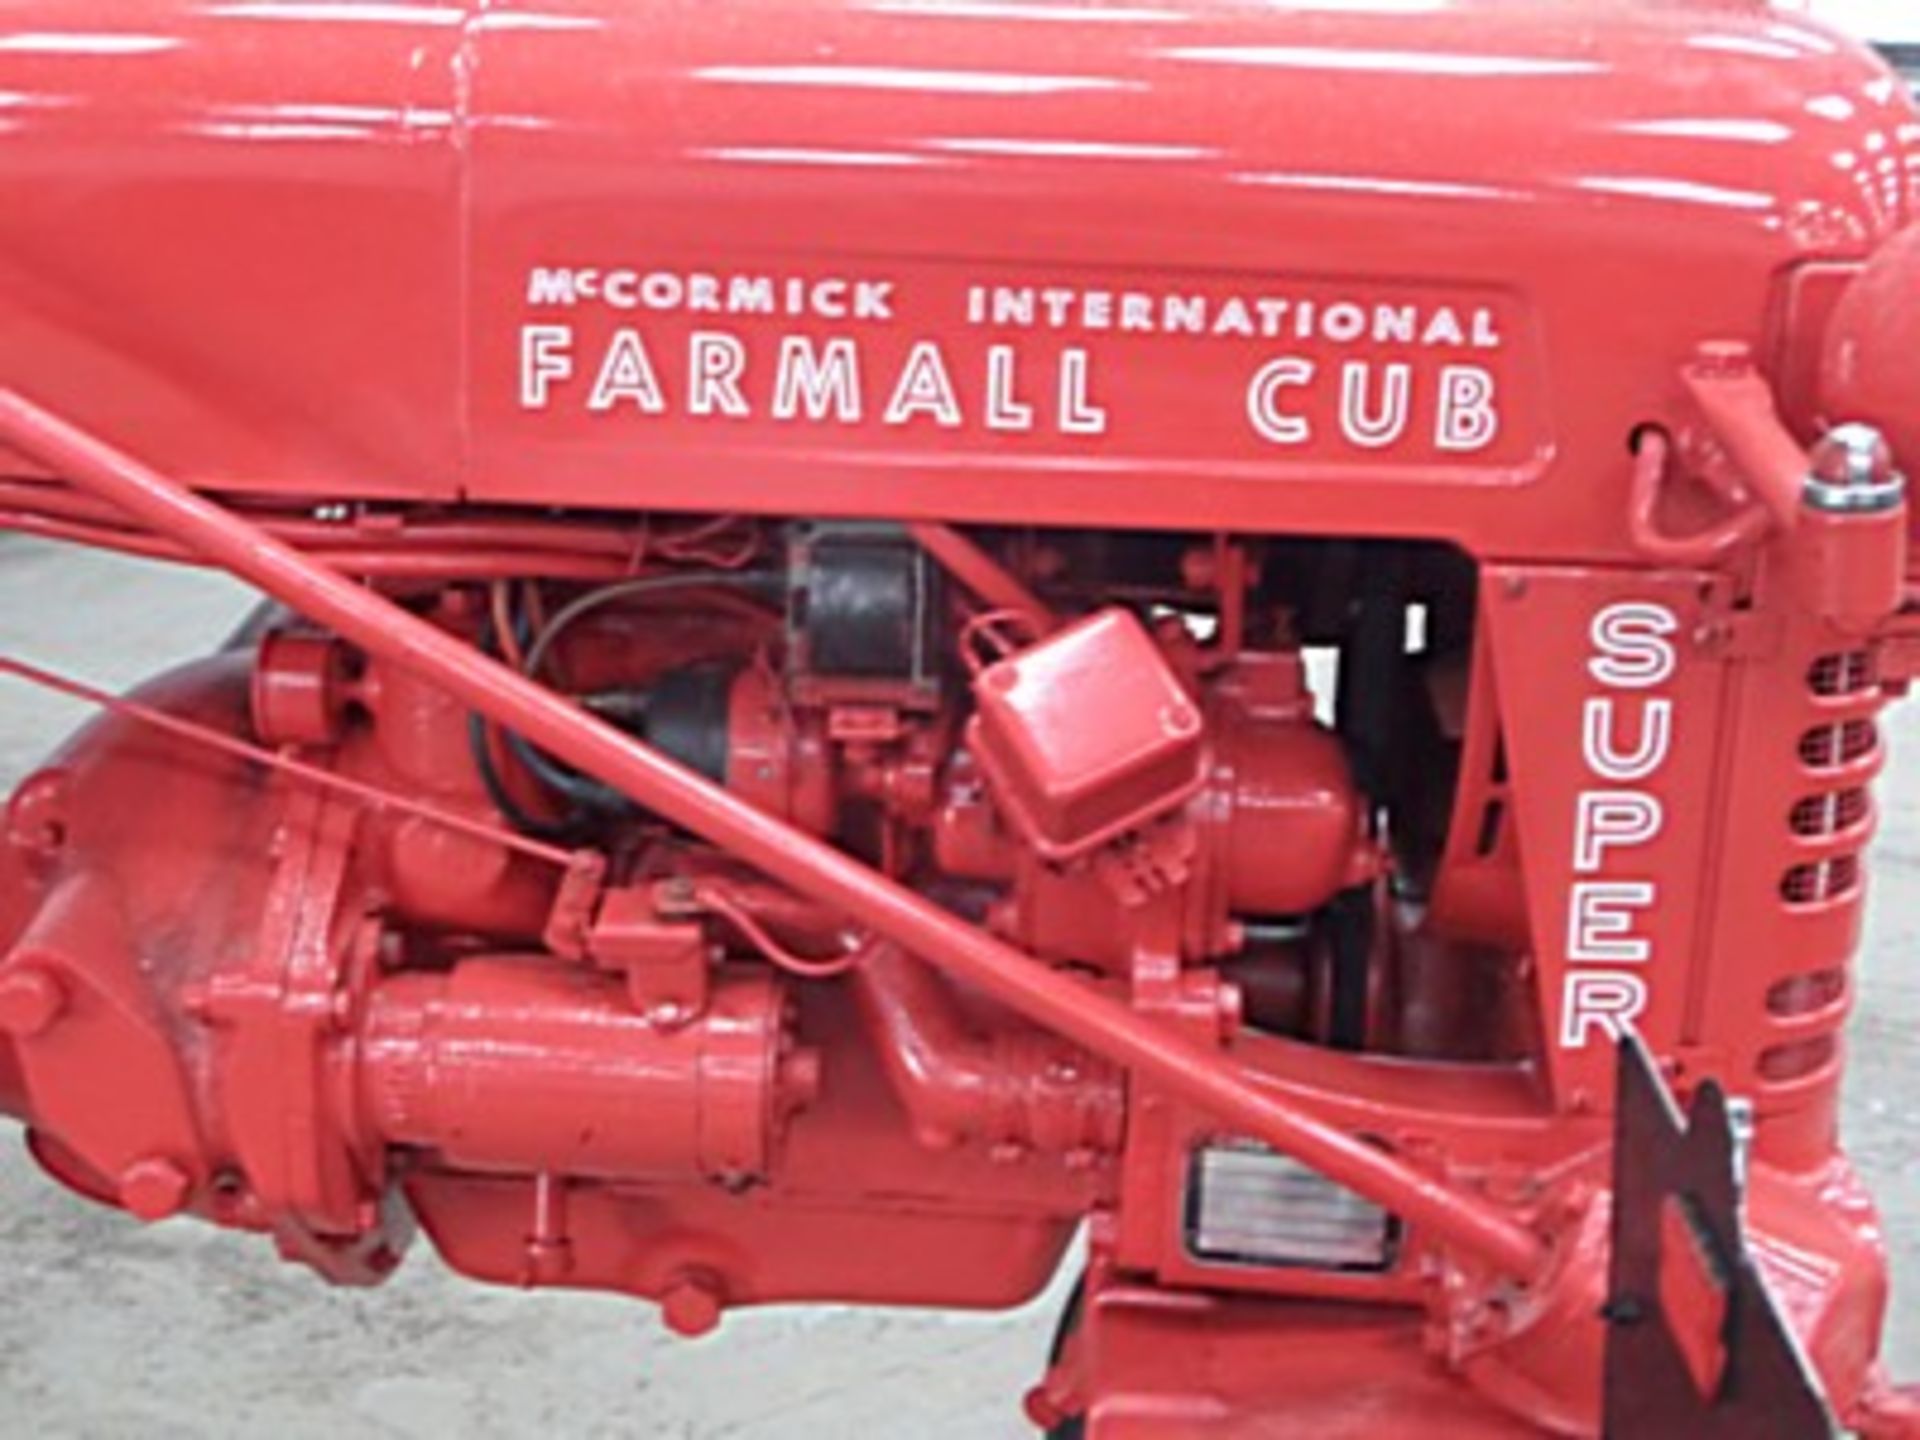 INTERNATIONAL FARMELL SUPER CUB  - 0cc, 1960 - Image 4 of 21